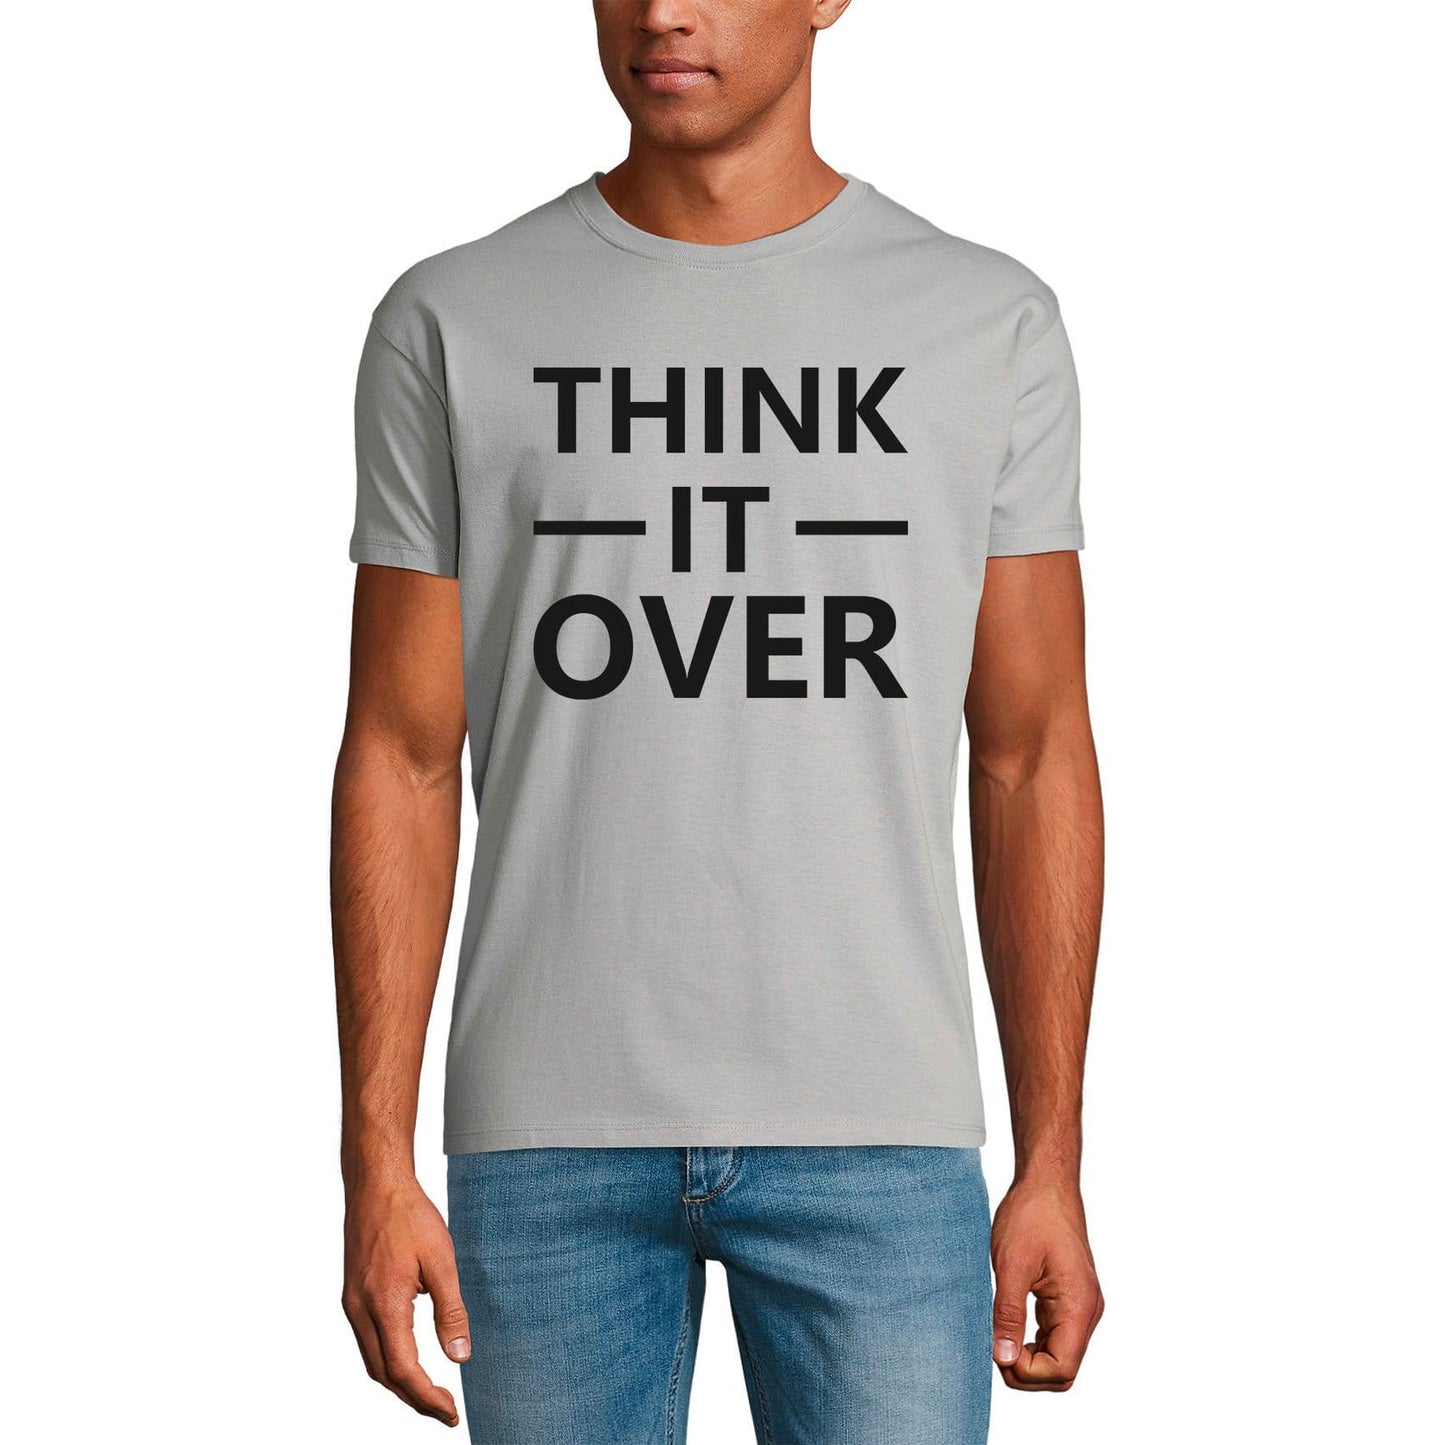 ULTRABASIC Men's Graphic T-Shirt Think It Over - Funny Novelty Shirt for Men